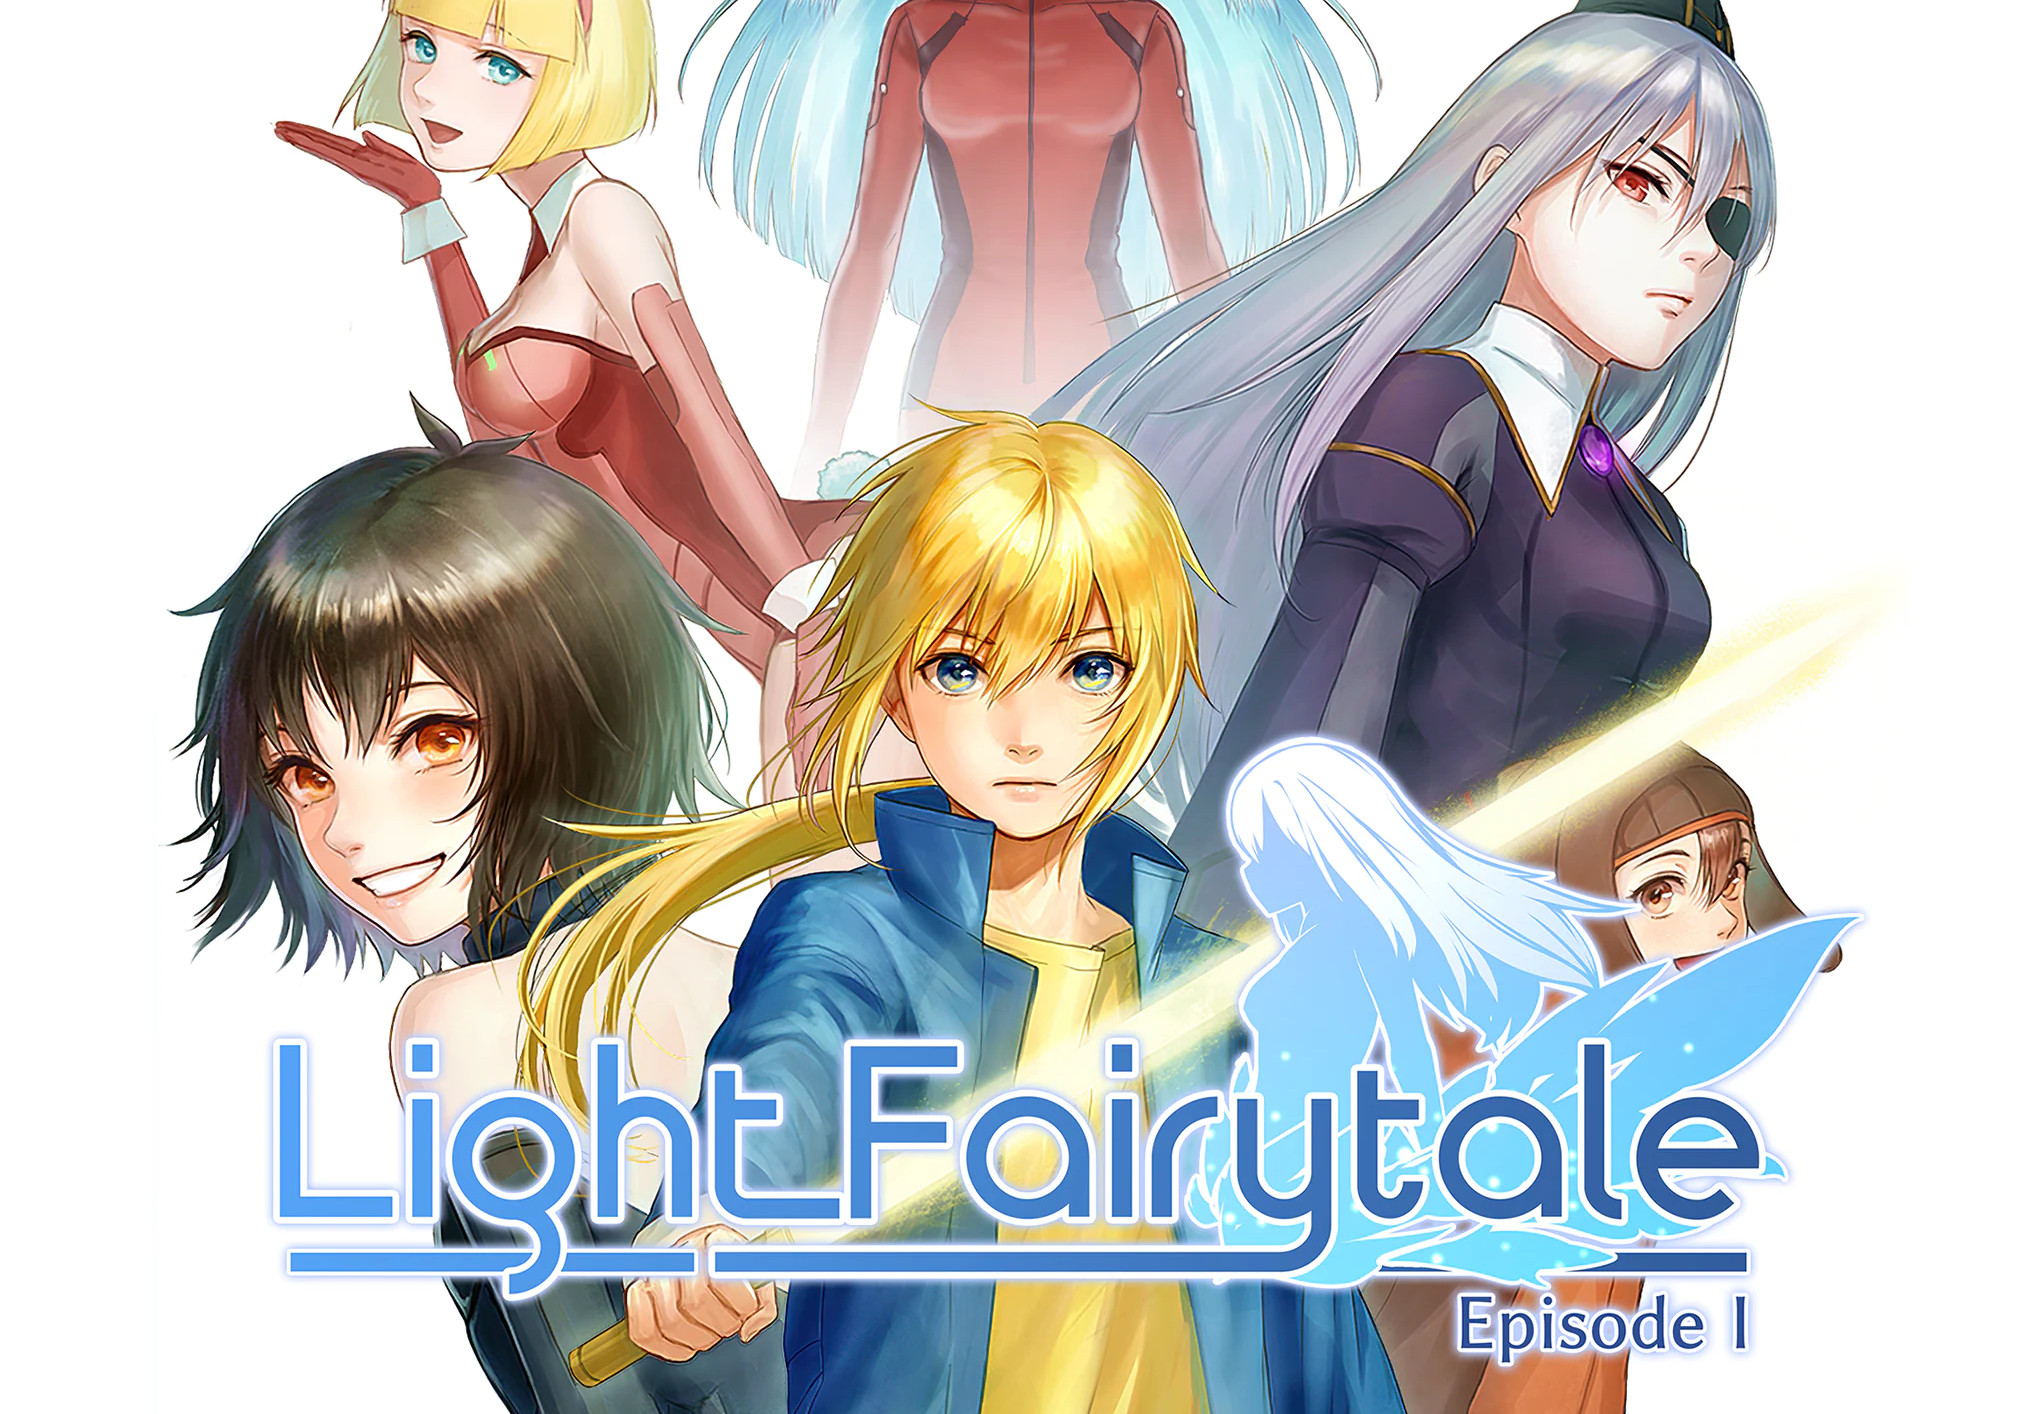 Light Fairytale Episode 1 Steam CD Key